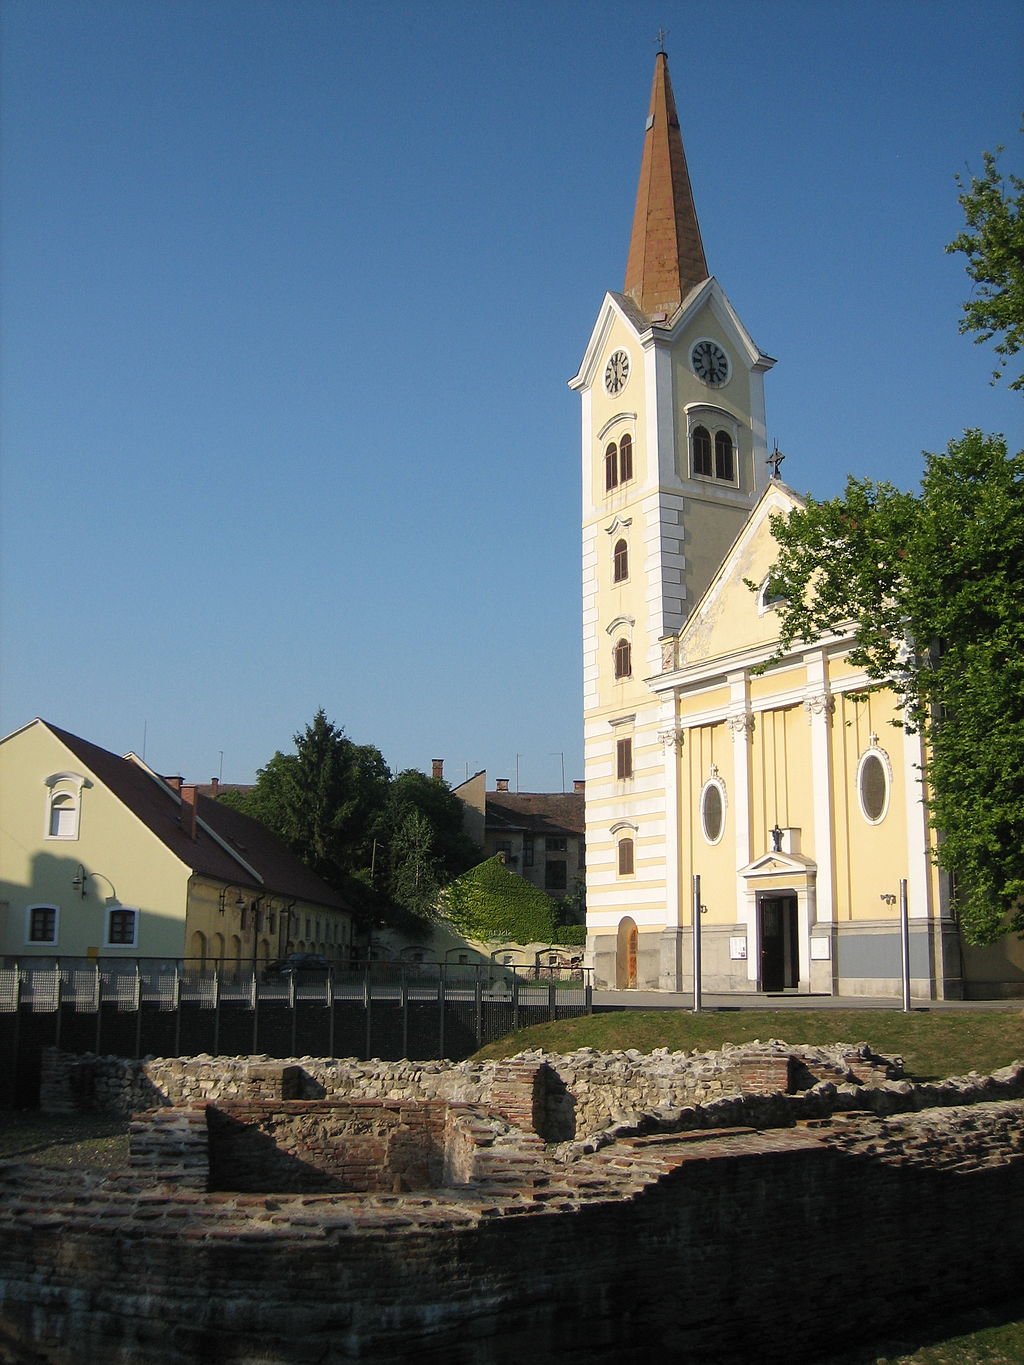 Sisak Holy cross church bell tower cap removed